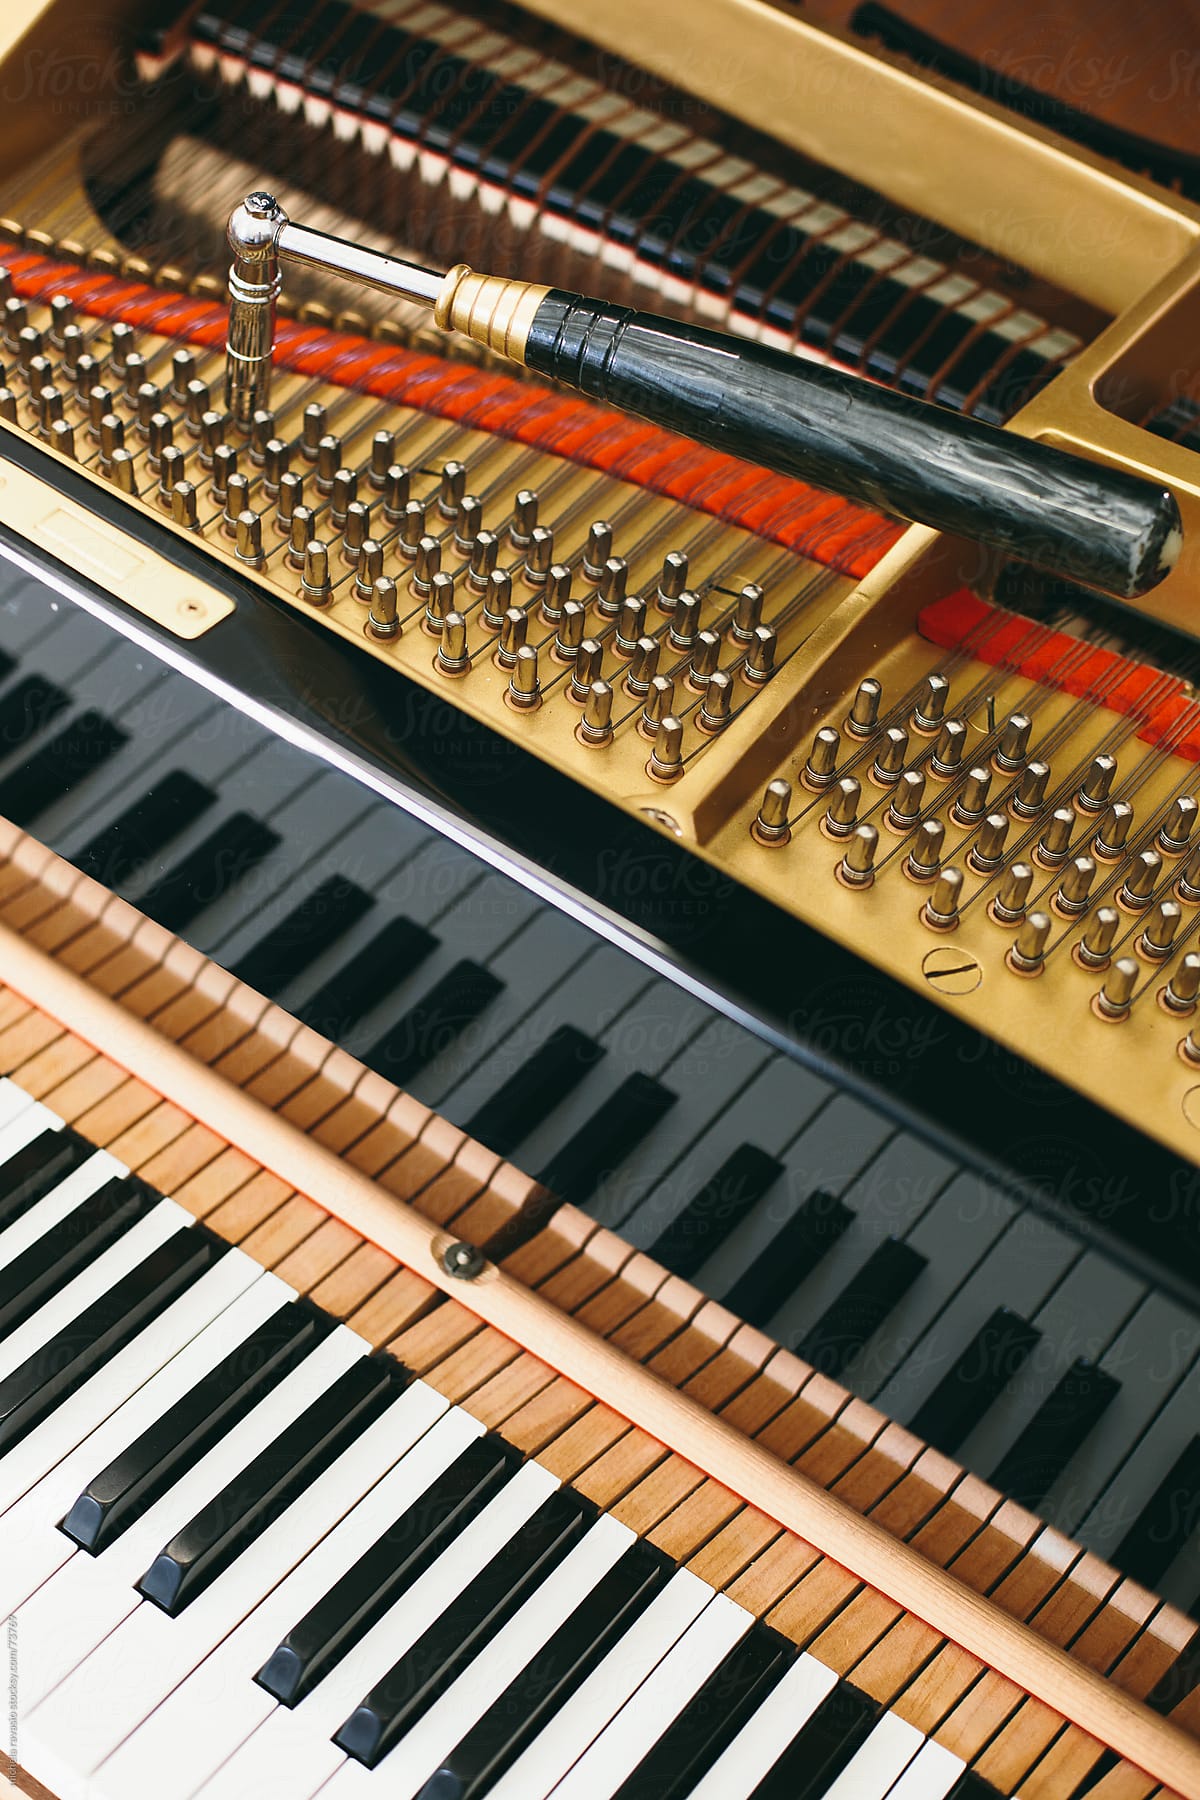 Keyboard and mechanics of a piano